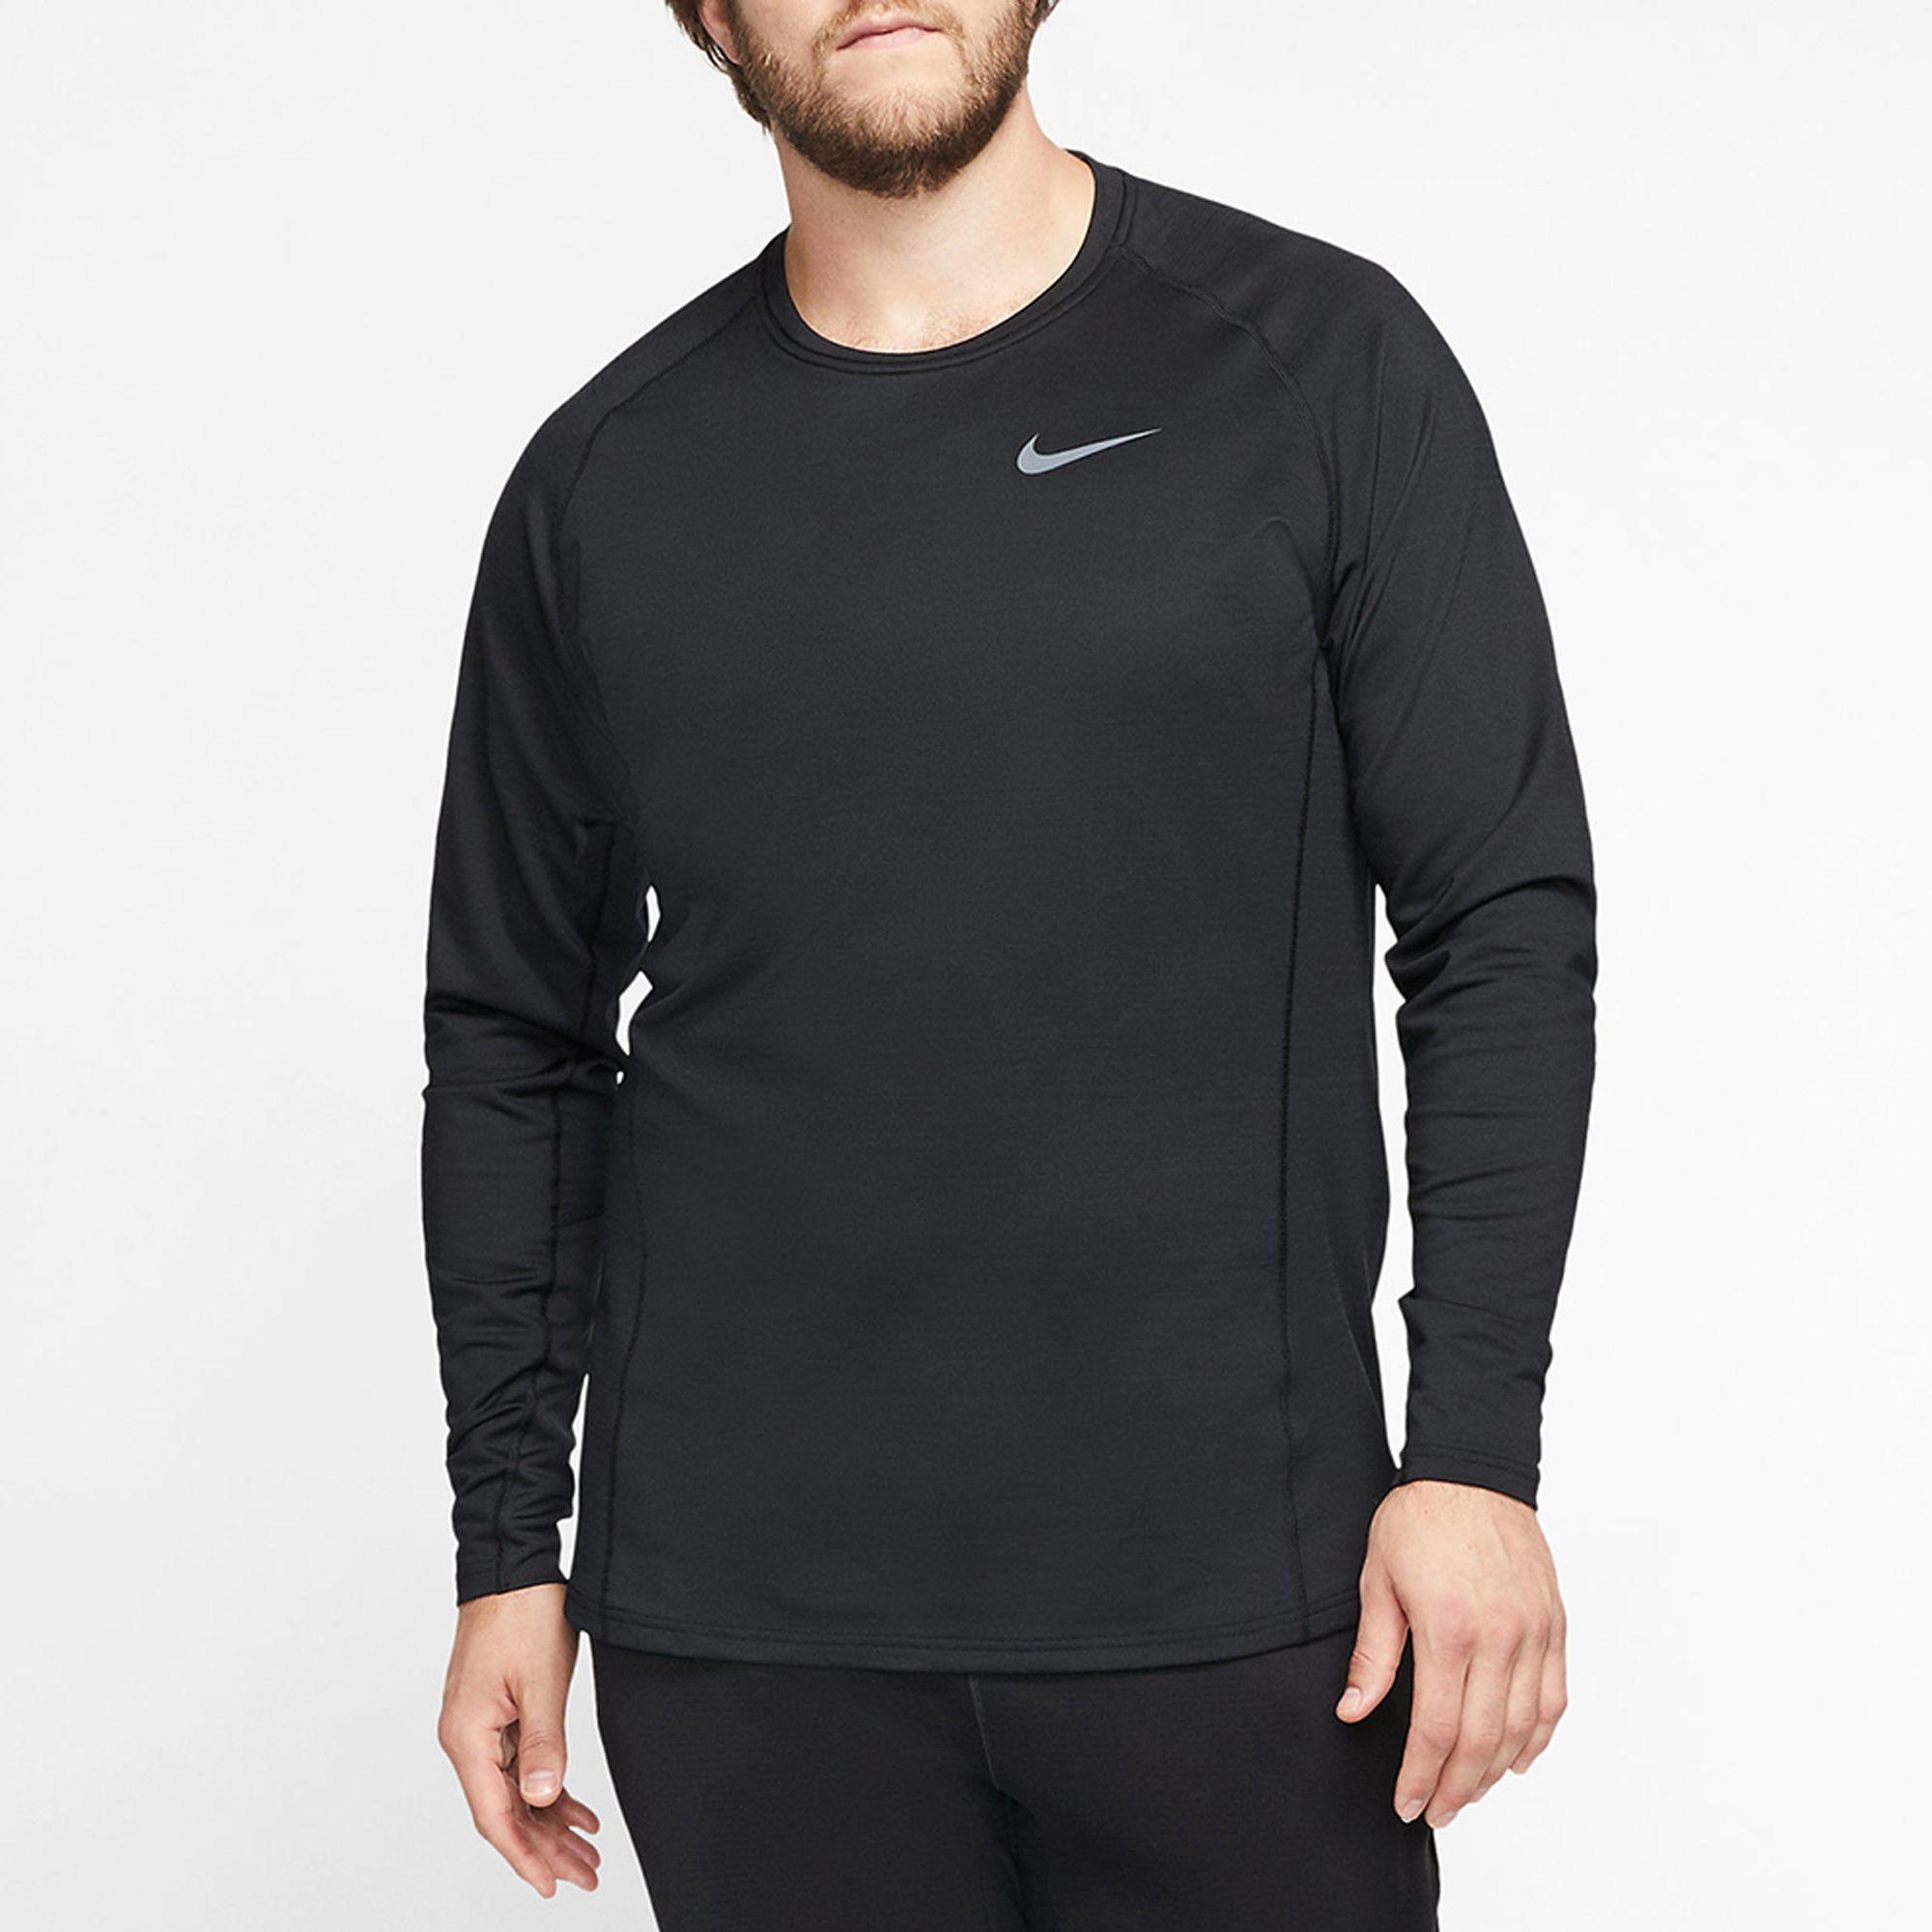 Nike Pro Therma Dri-fit Long Sleeve Shirt in Black/Dark Grey (Black ...